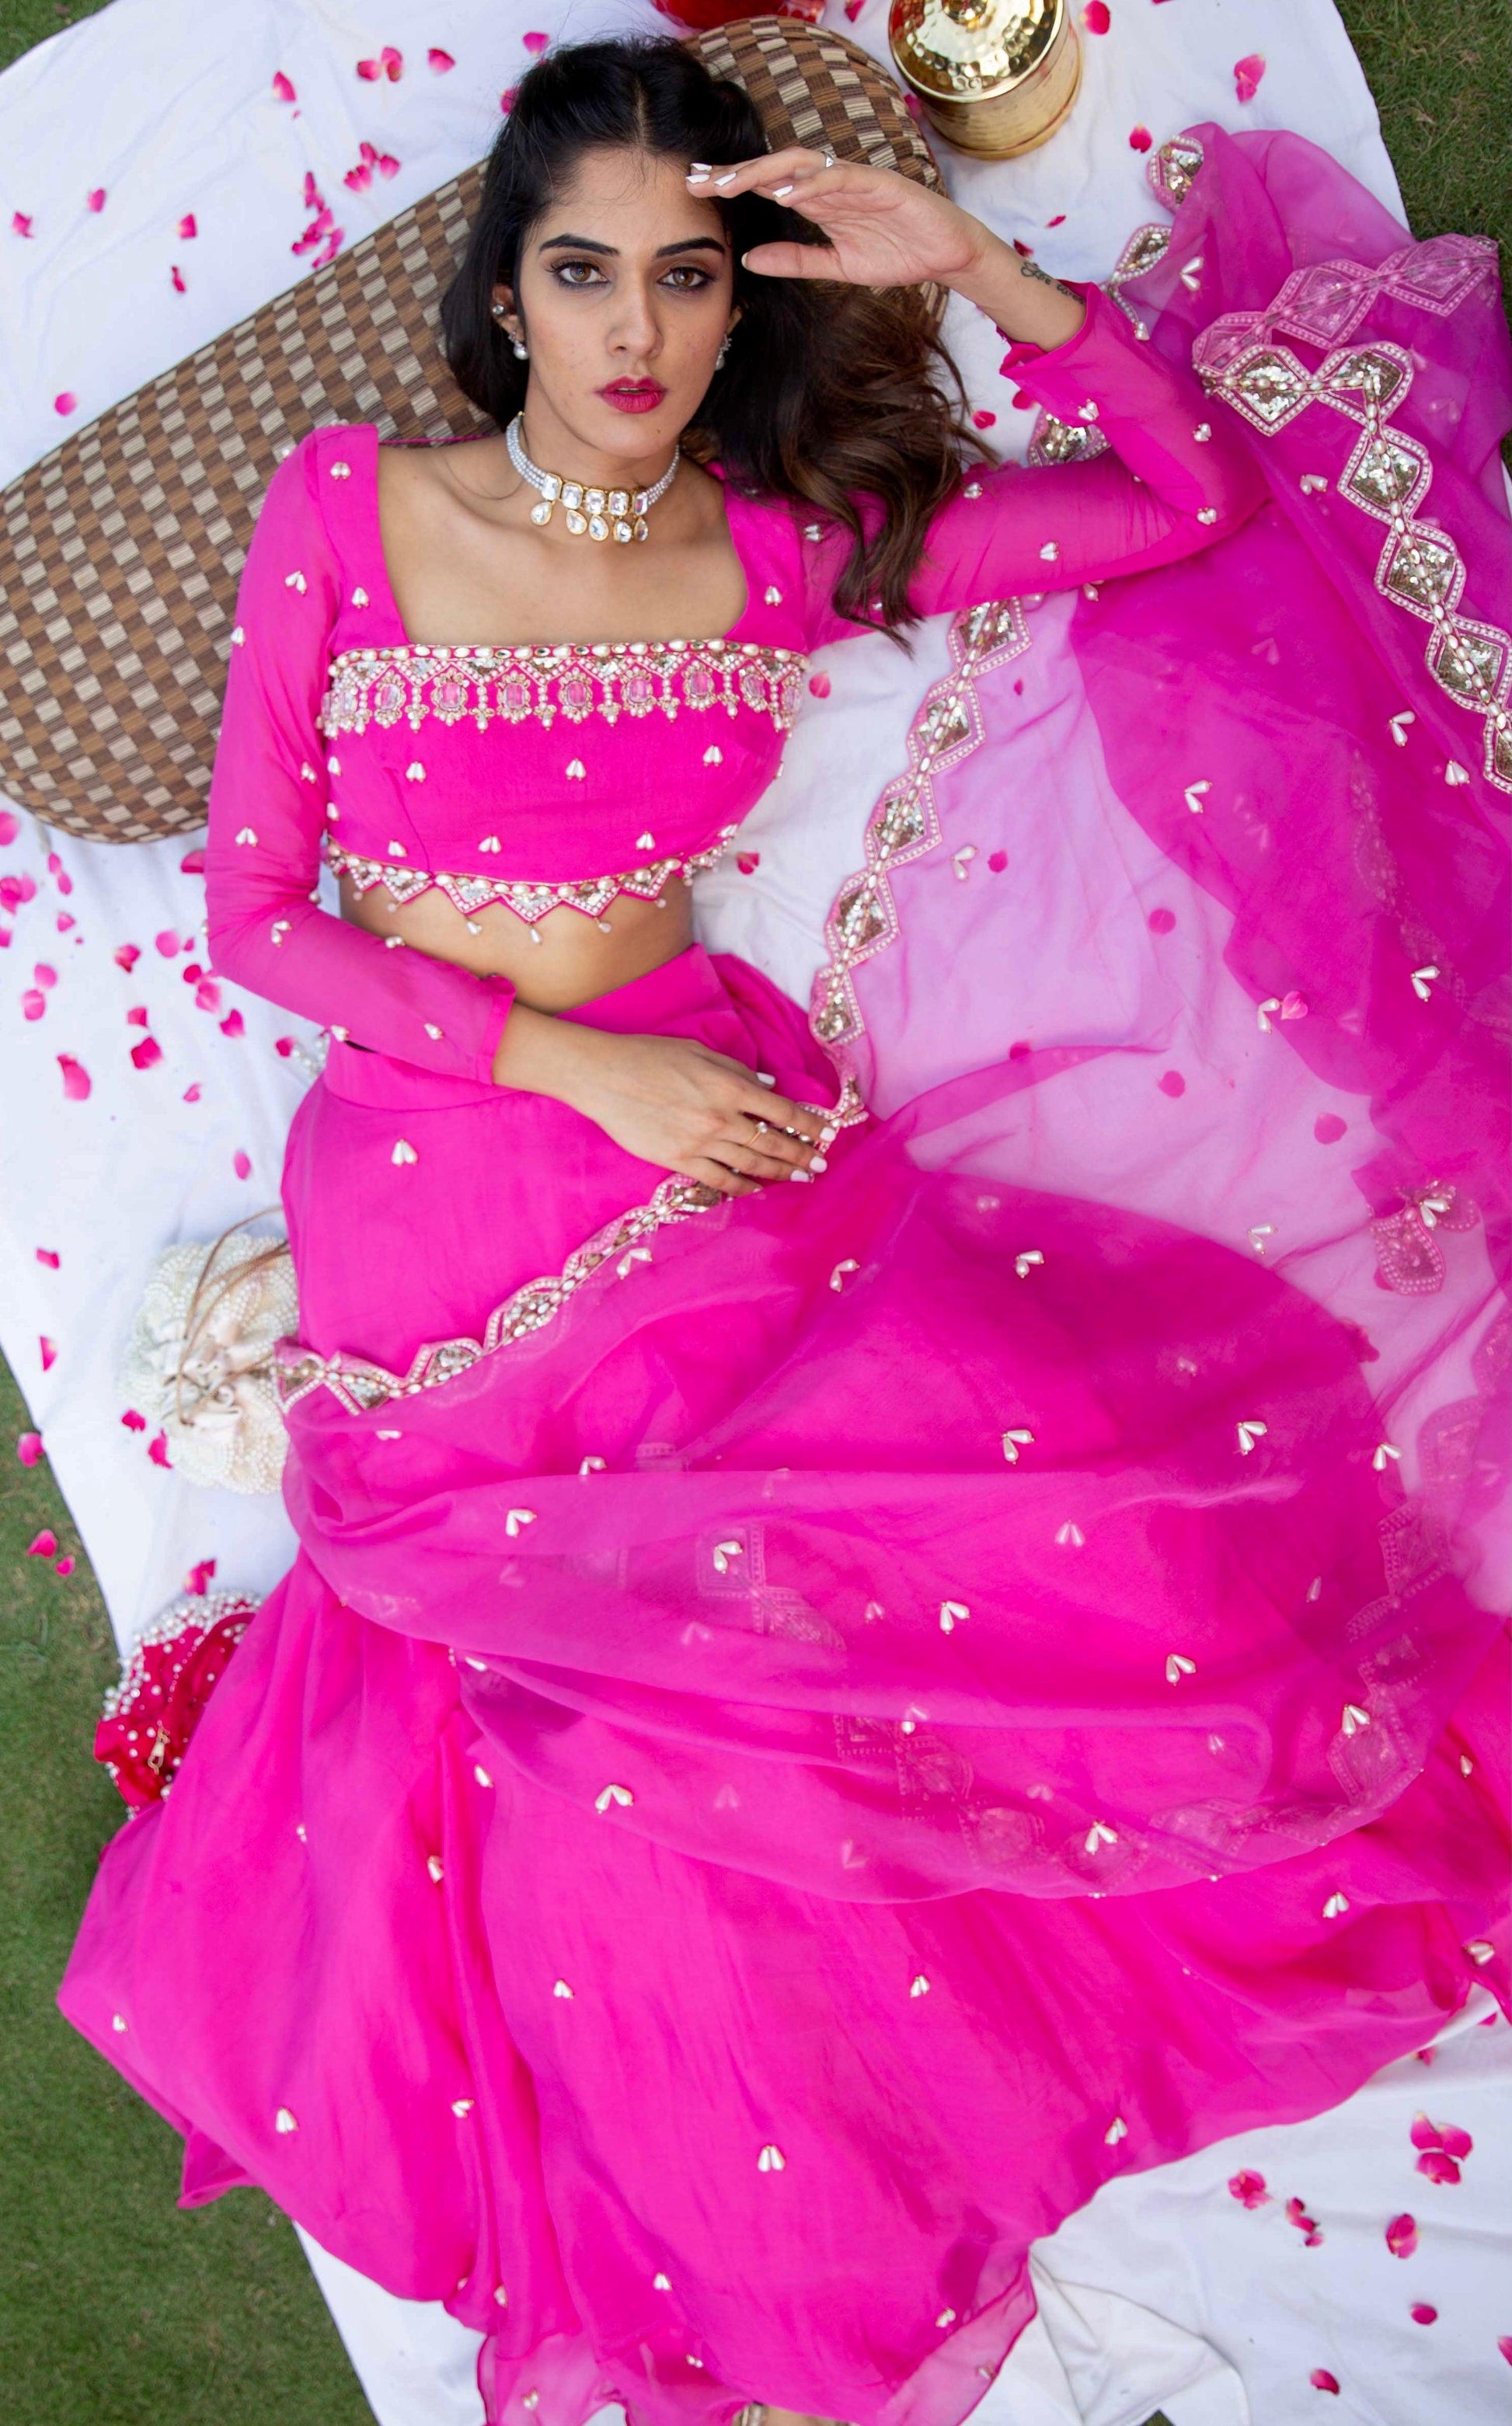 The 'Pretty in pink' lehenga set - Nishi Madaan Label